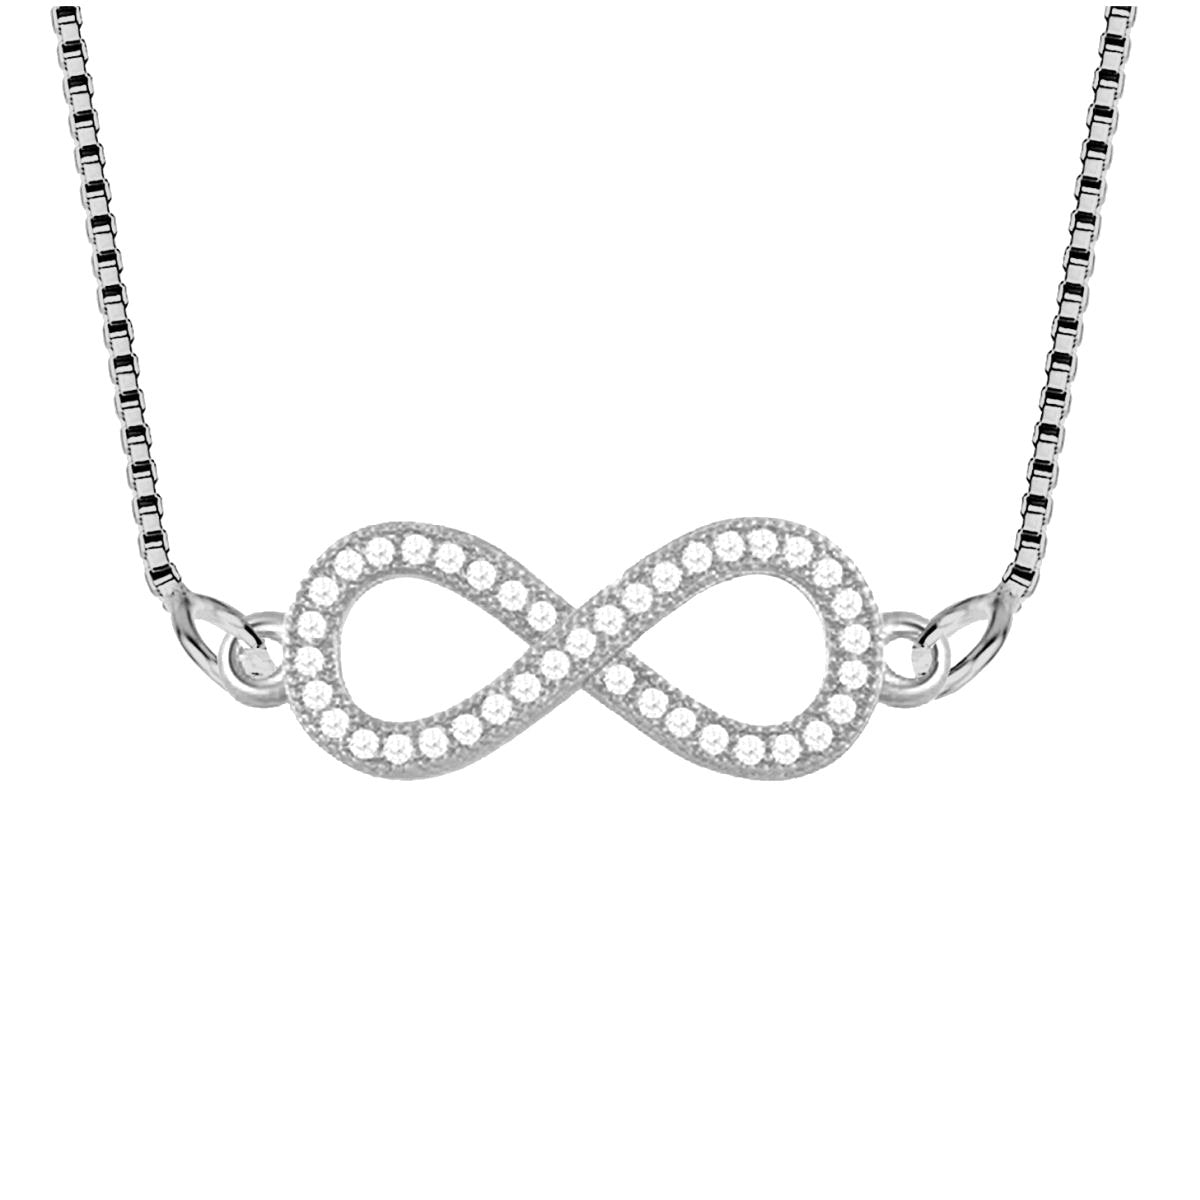 Swarovski Heart Necklace in Sterling Silver